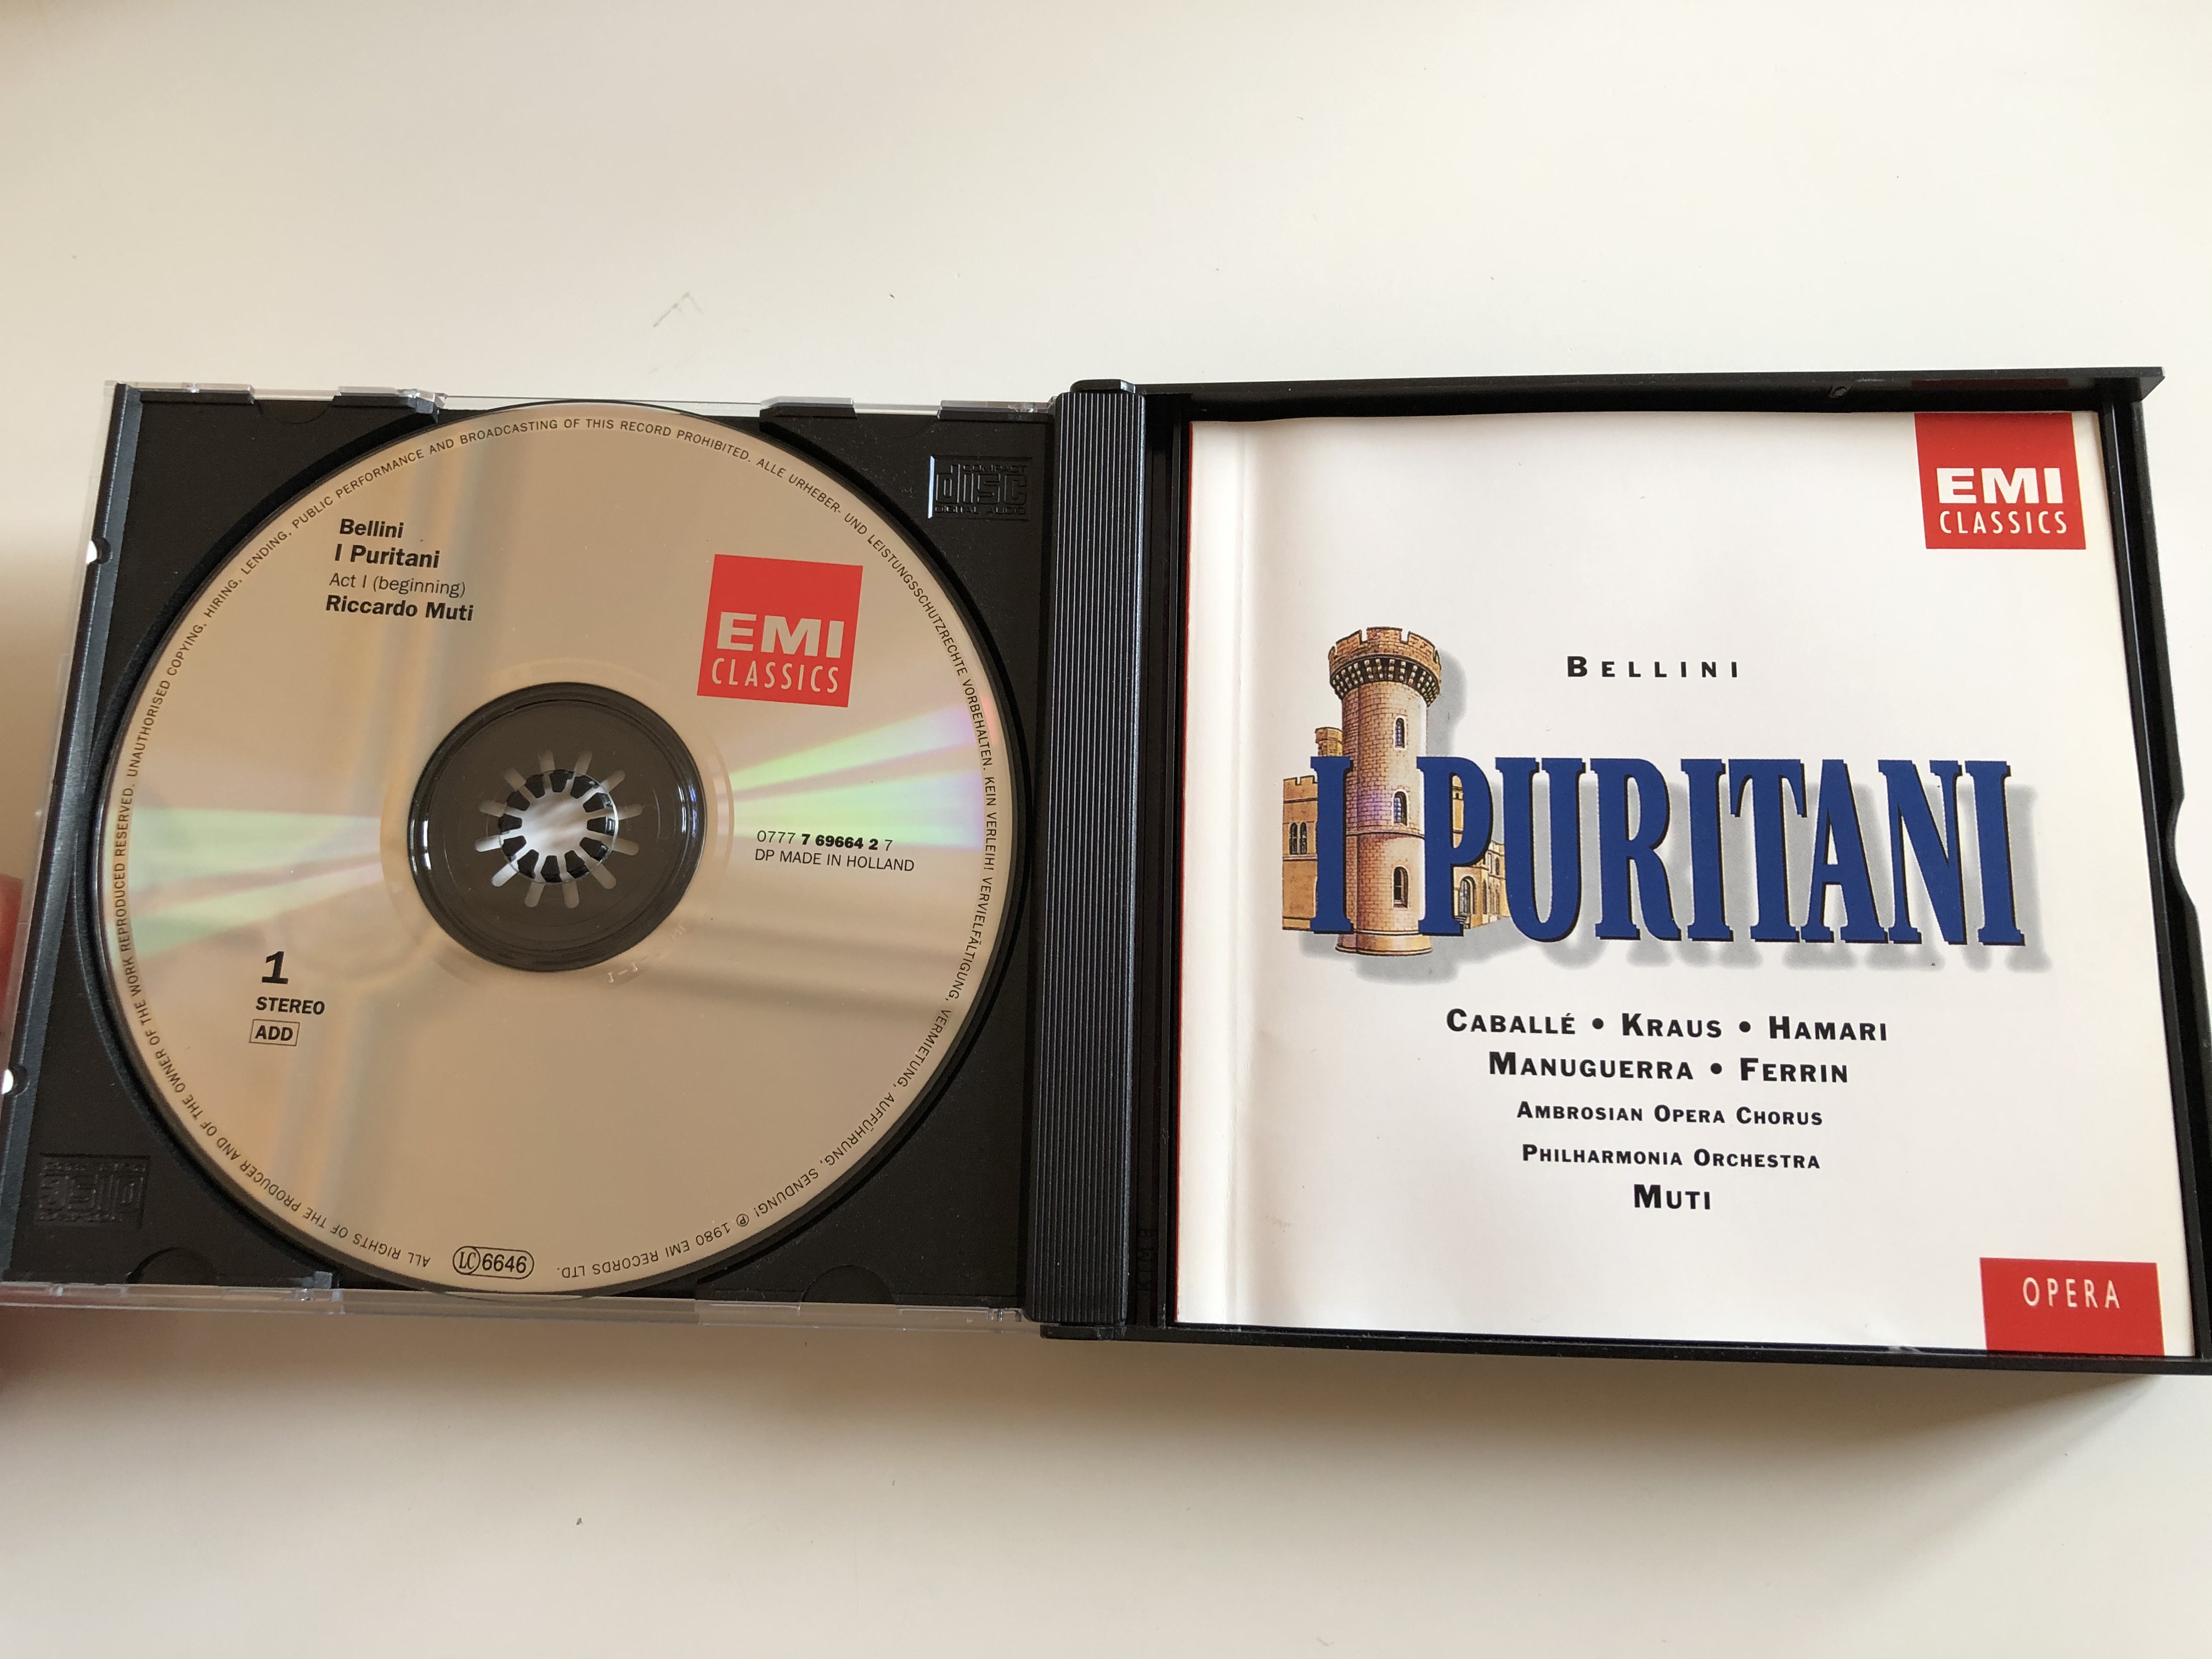 bellini-i-puritani-caball-kraus-hamari-manuguerra-ferrin-ambrosian-opera-chorus-philharmonia-orchestra-muti-emi-classics-3x-audio-cd-1995-stereo-077776966328-3-.jpg